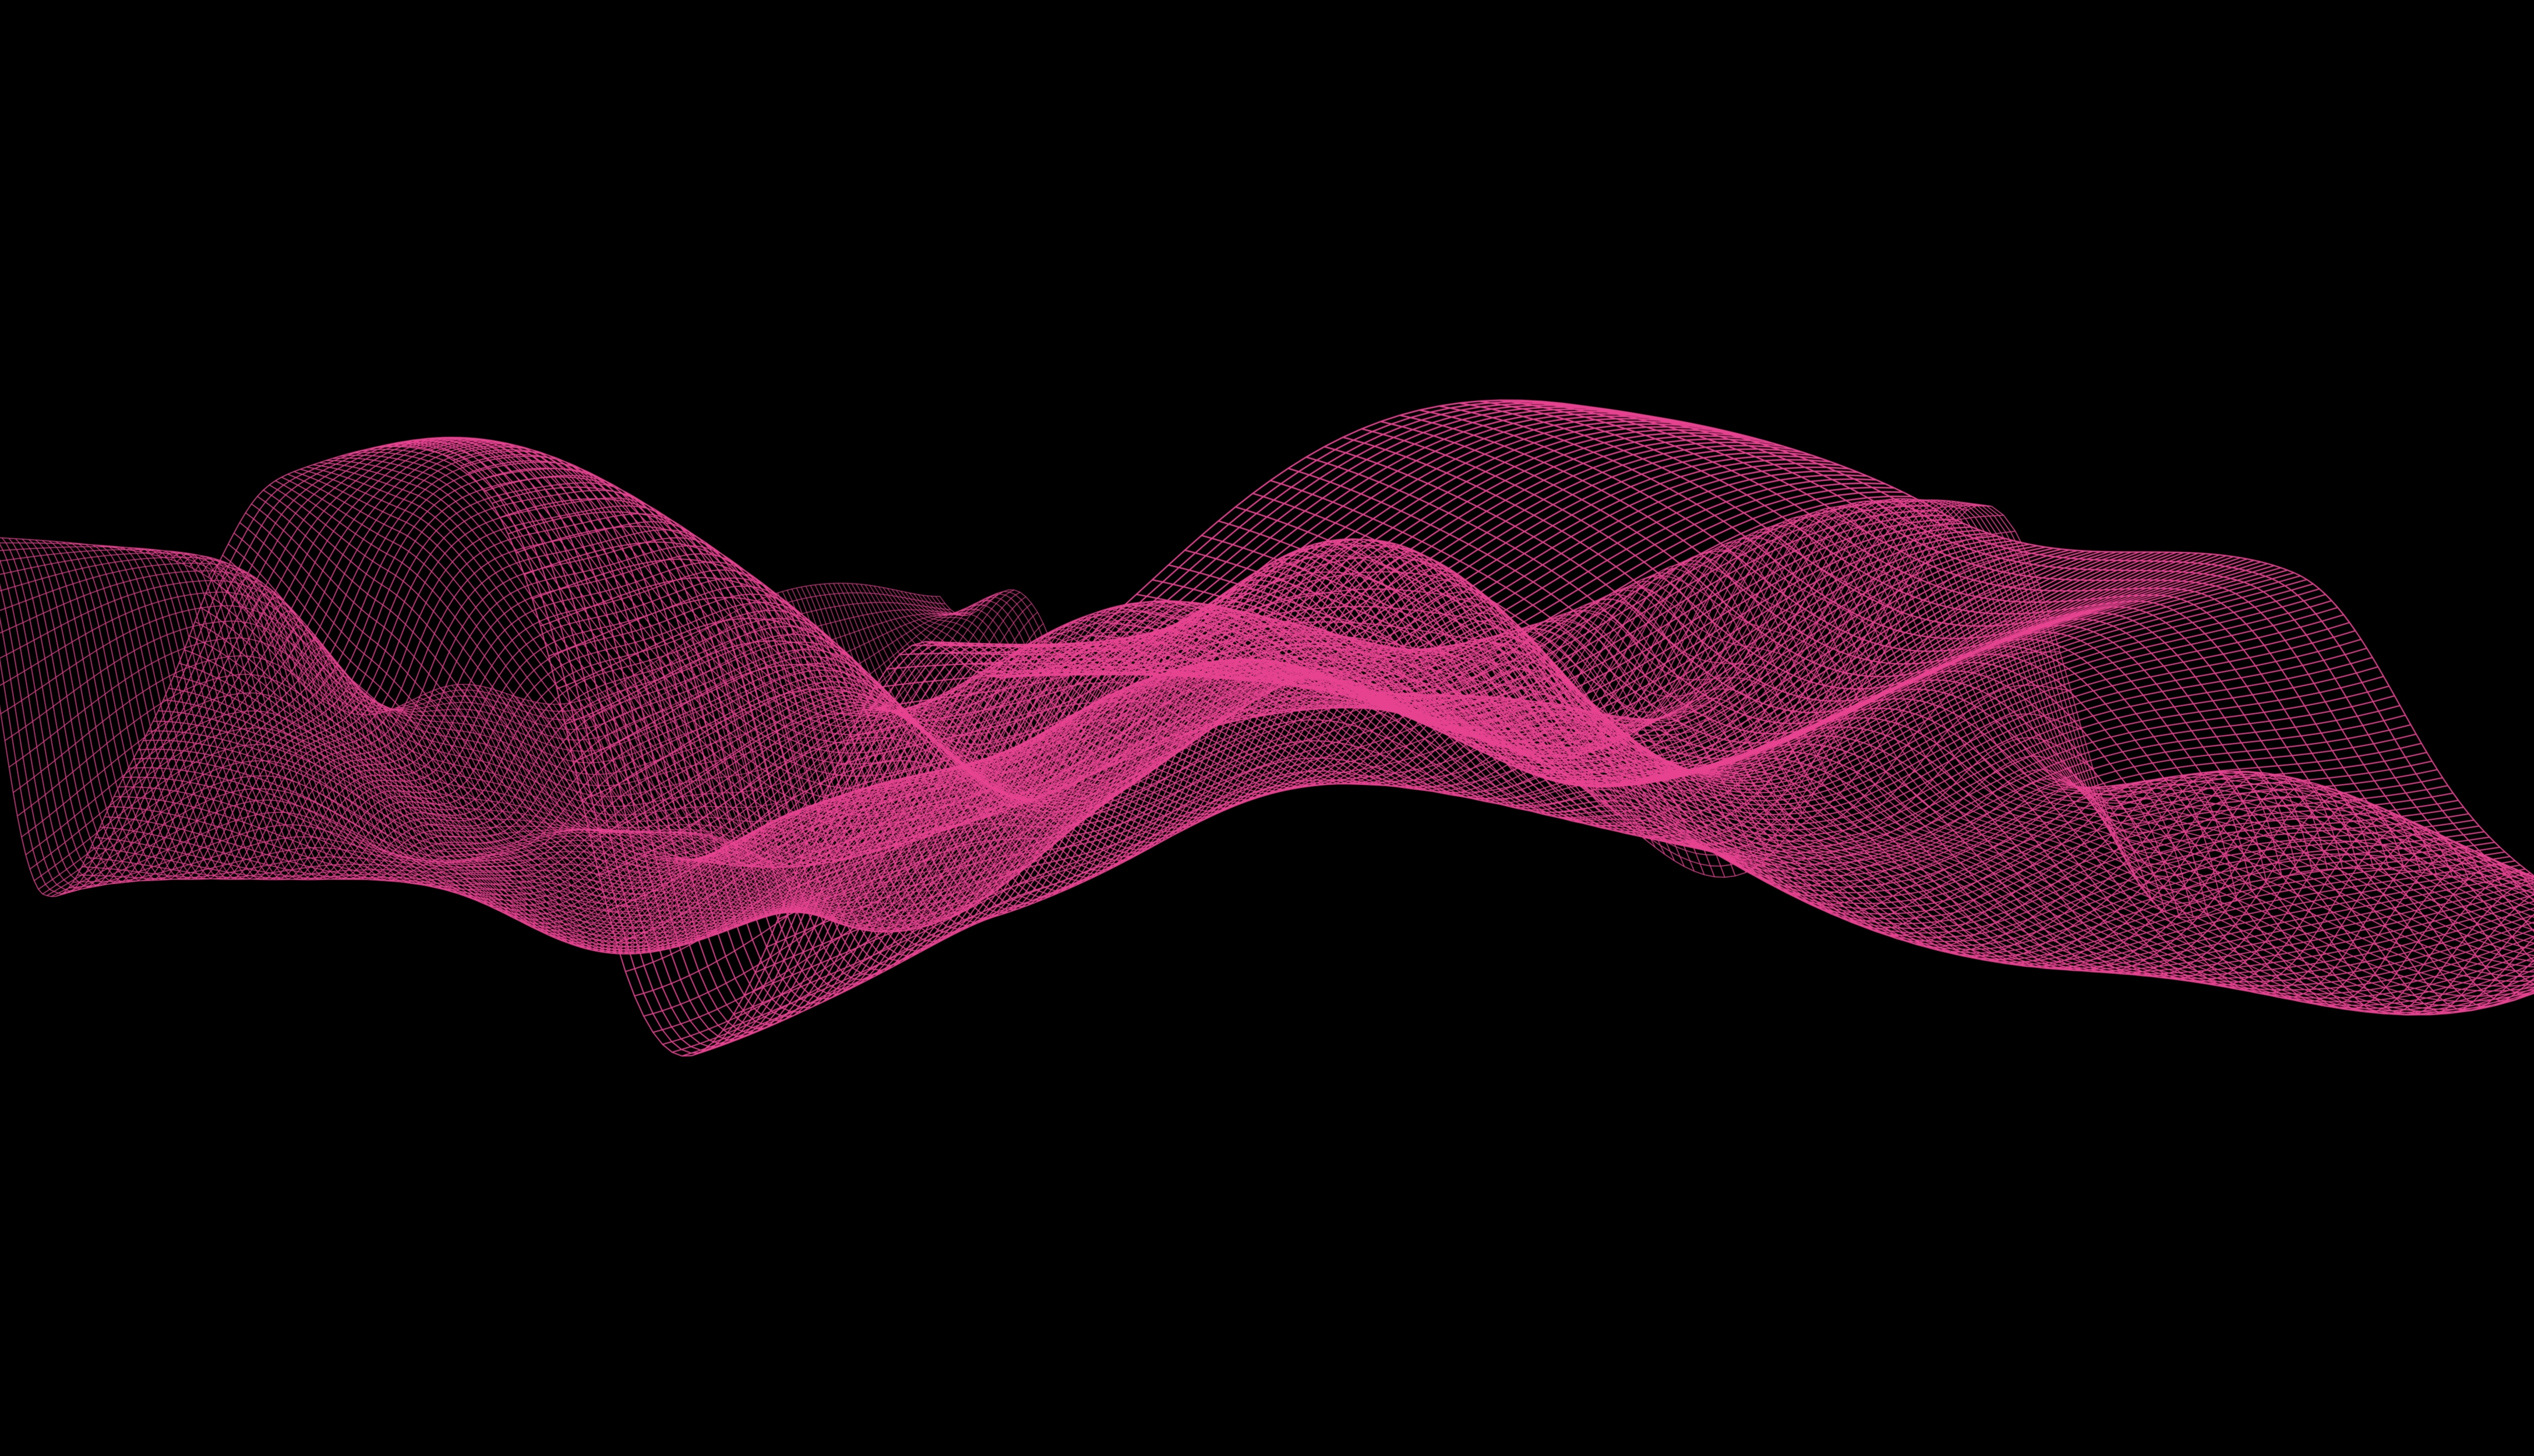 Illustration of sound-waves on black background (source: envato elements)